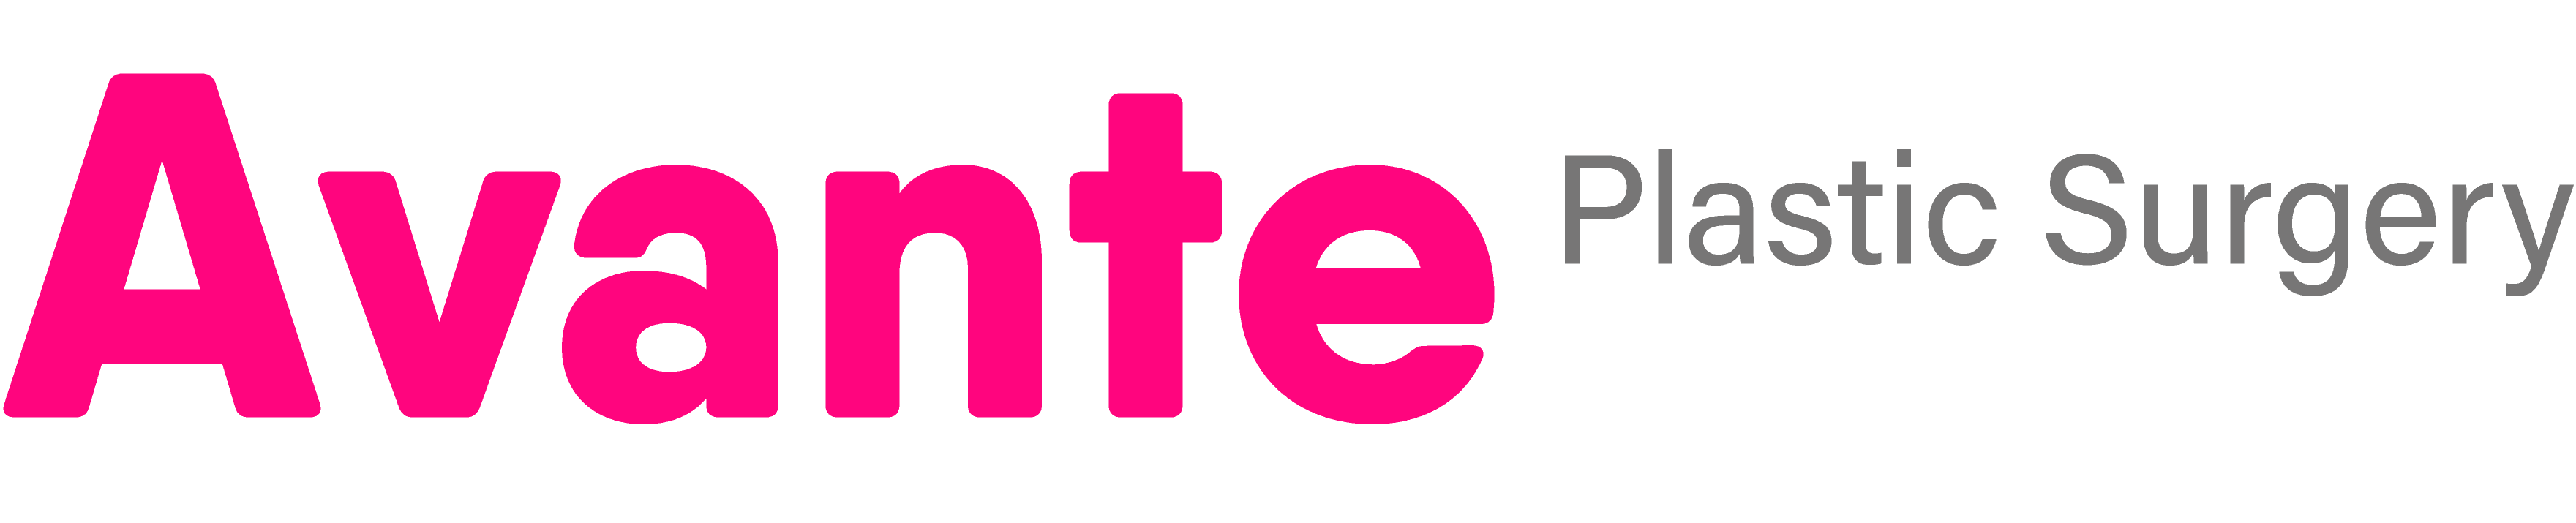 Avante_Logo.png